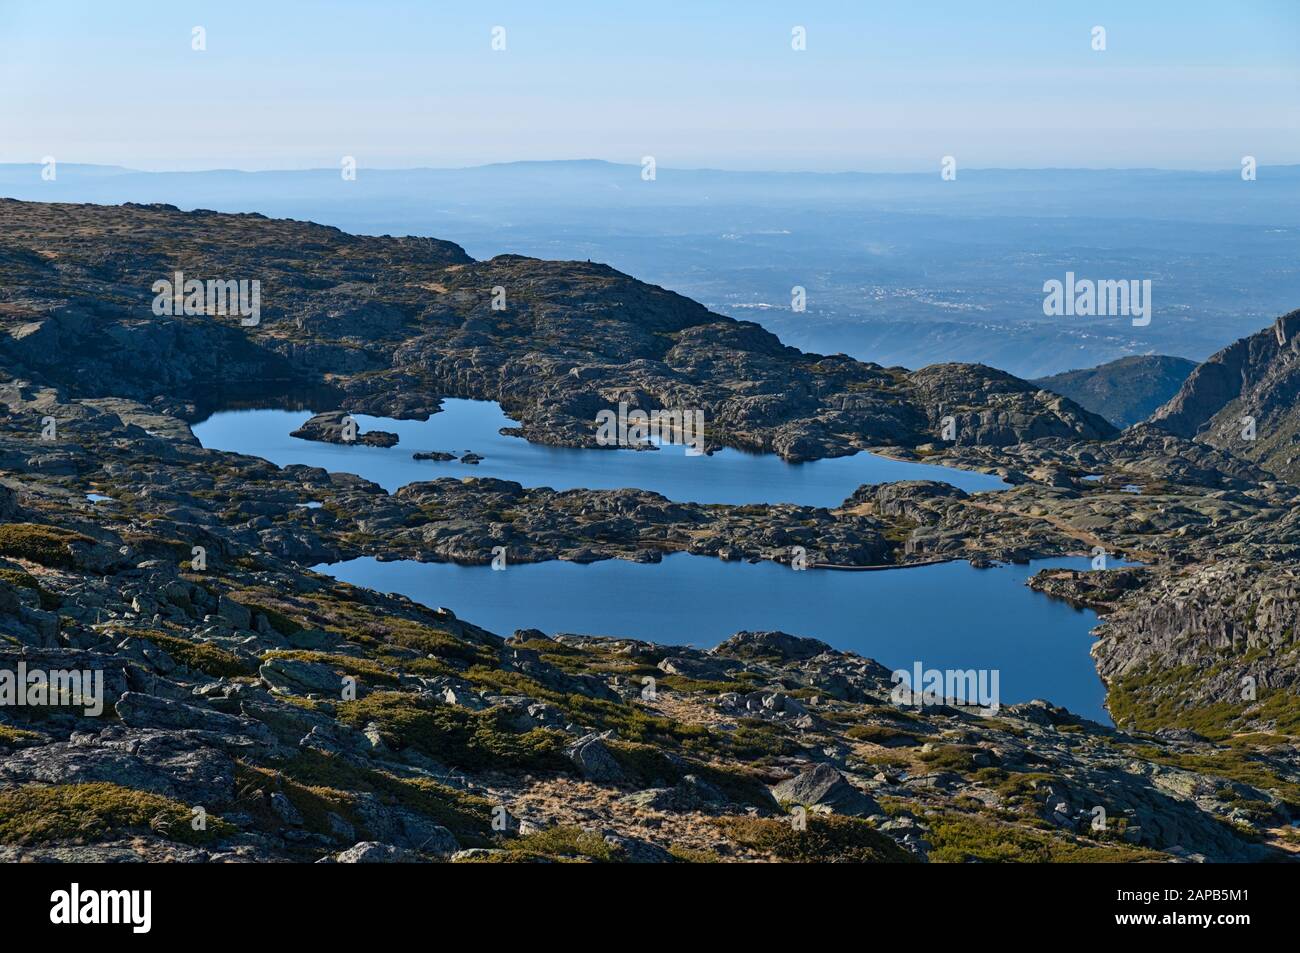 Lake in Serra da Estrela mountains from the aerial lift. Portugal Stock Photo